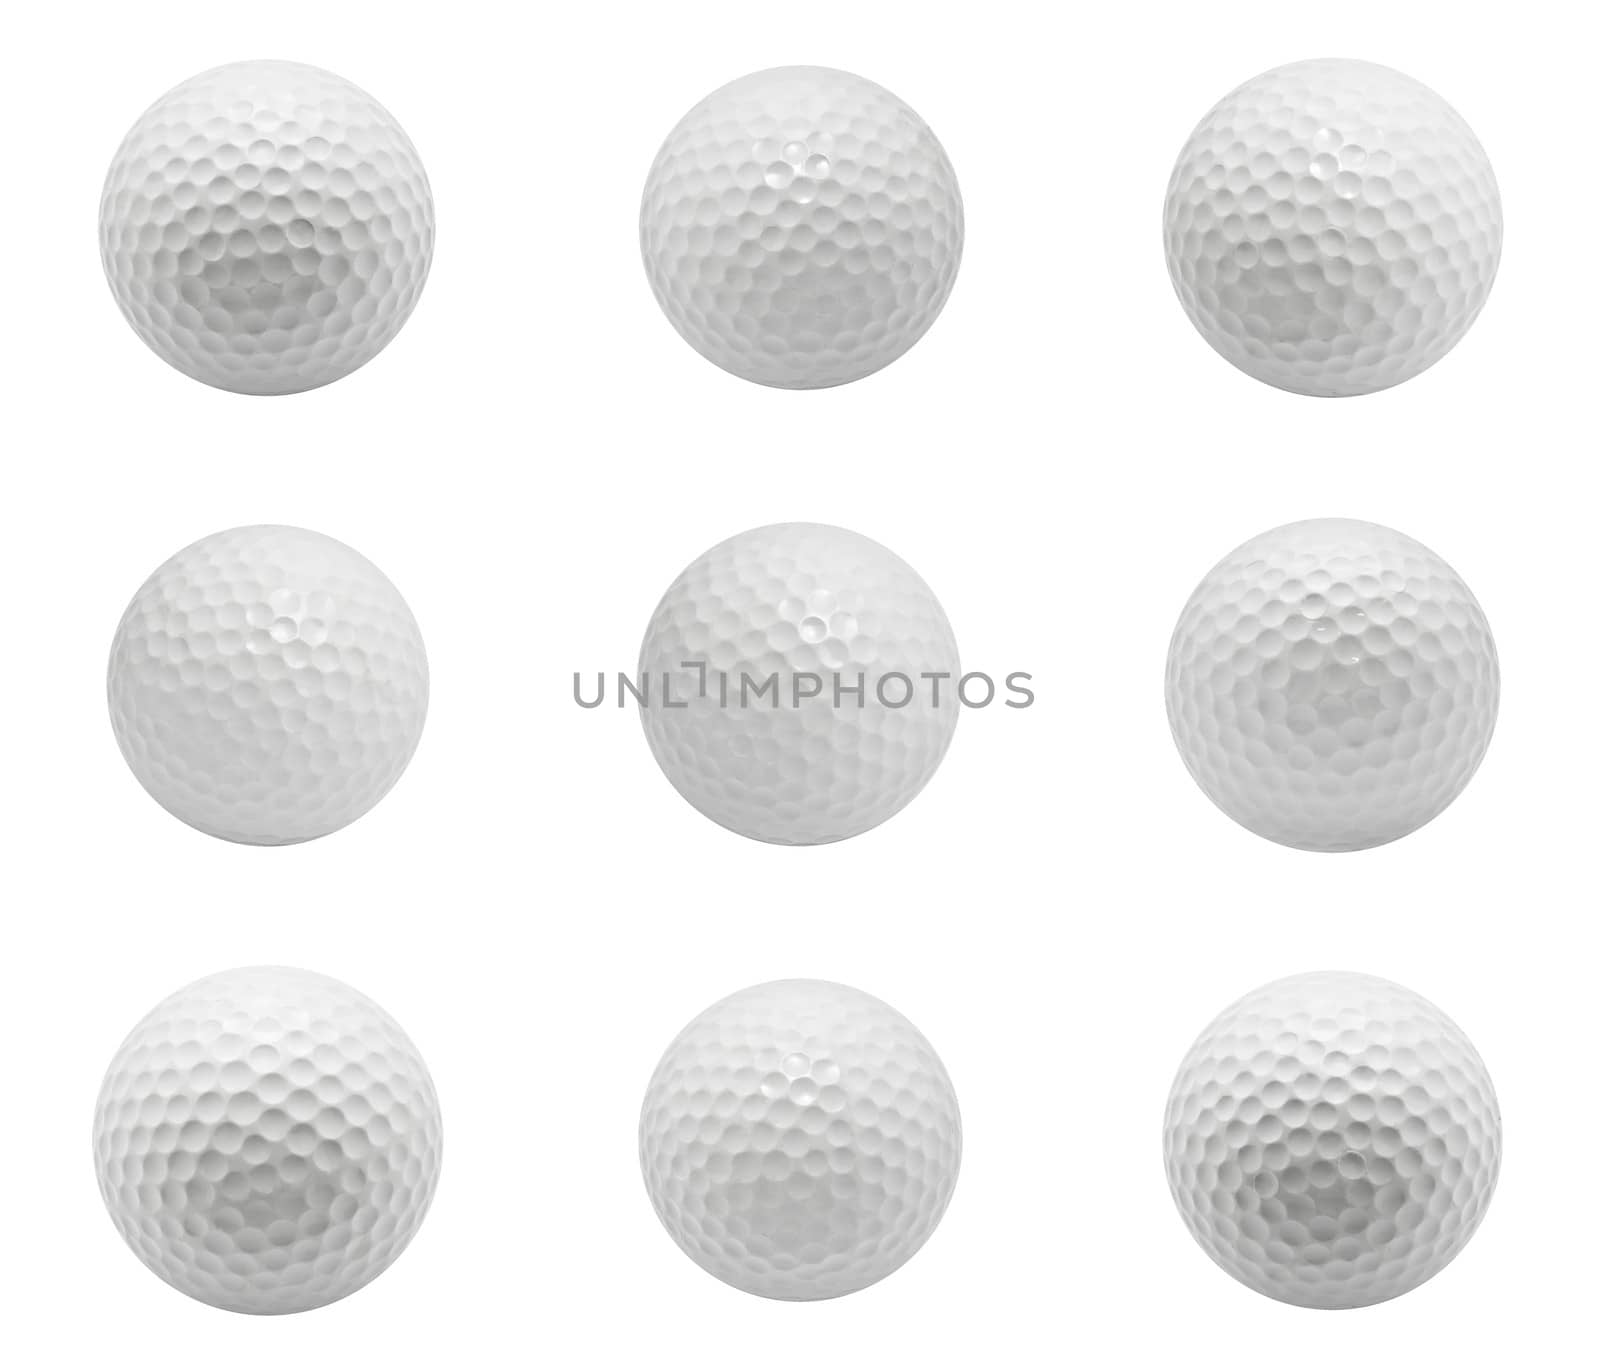 Golf balls by sailorr